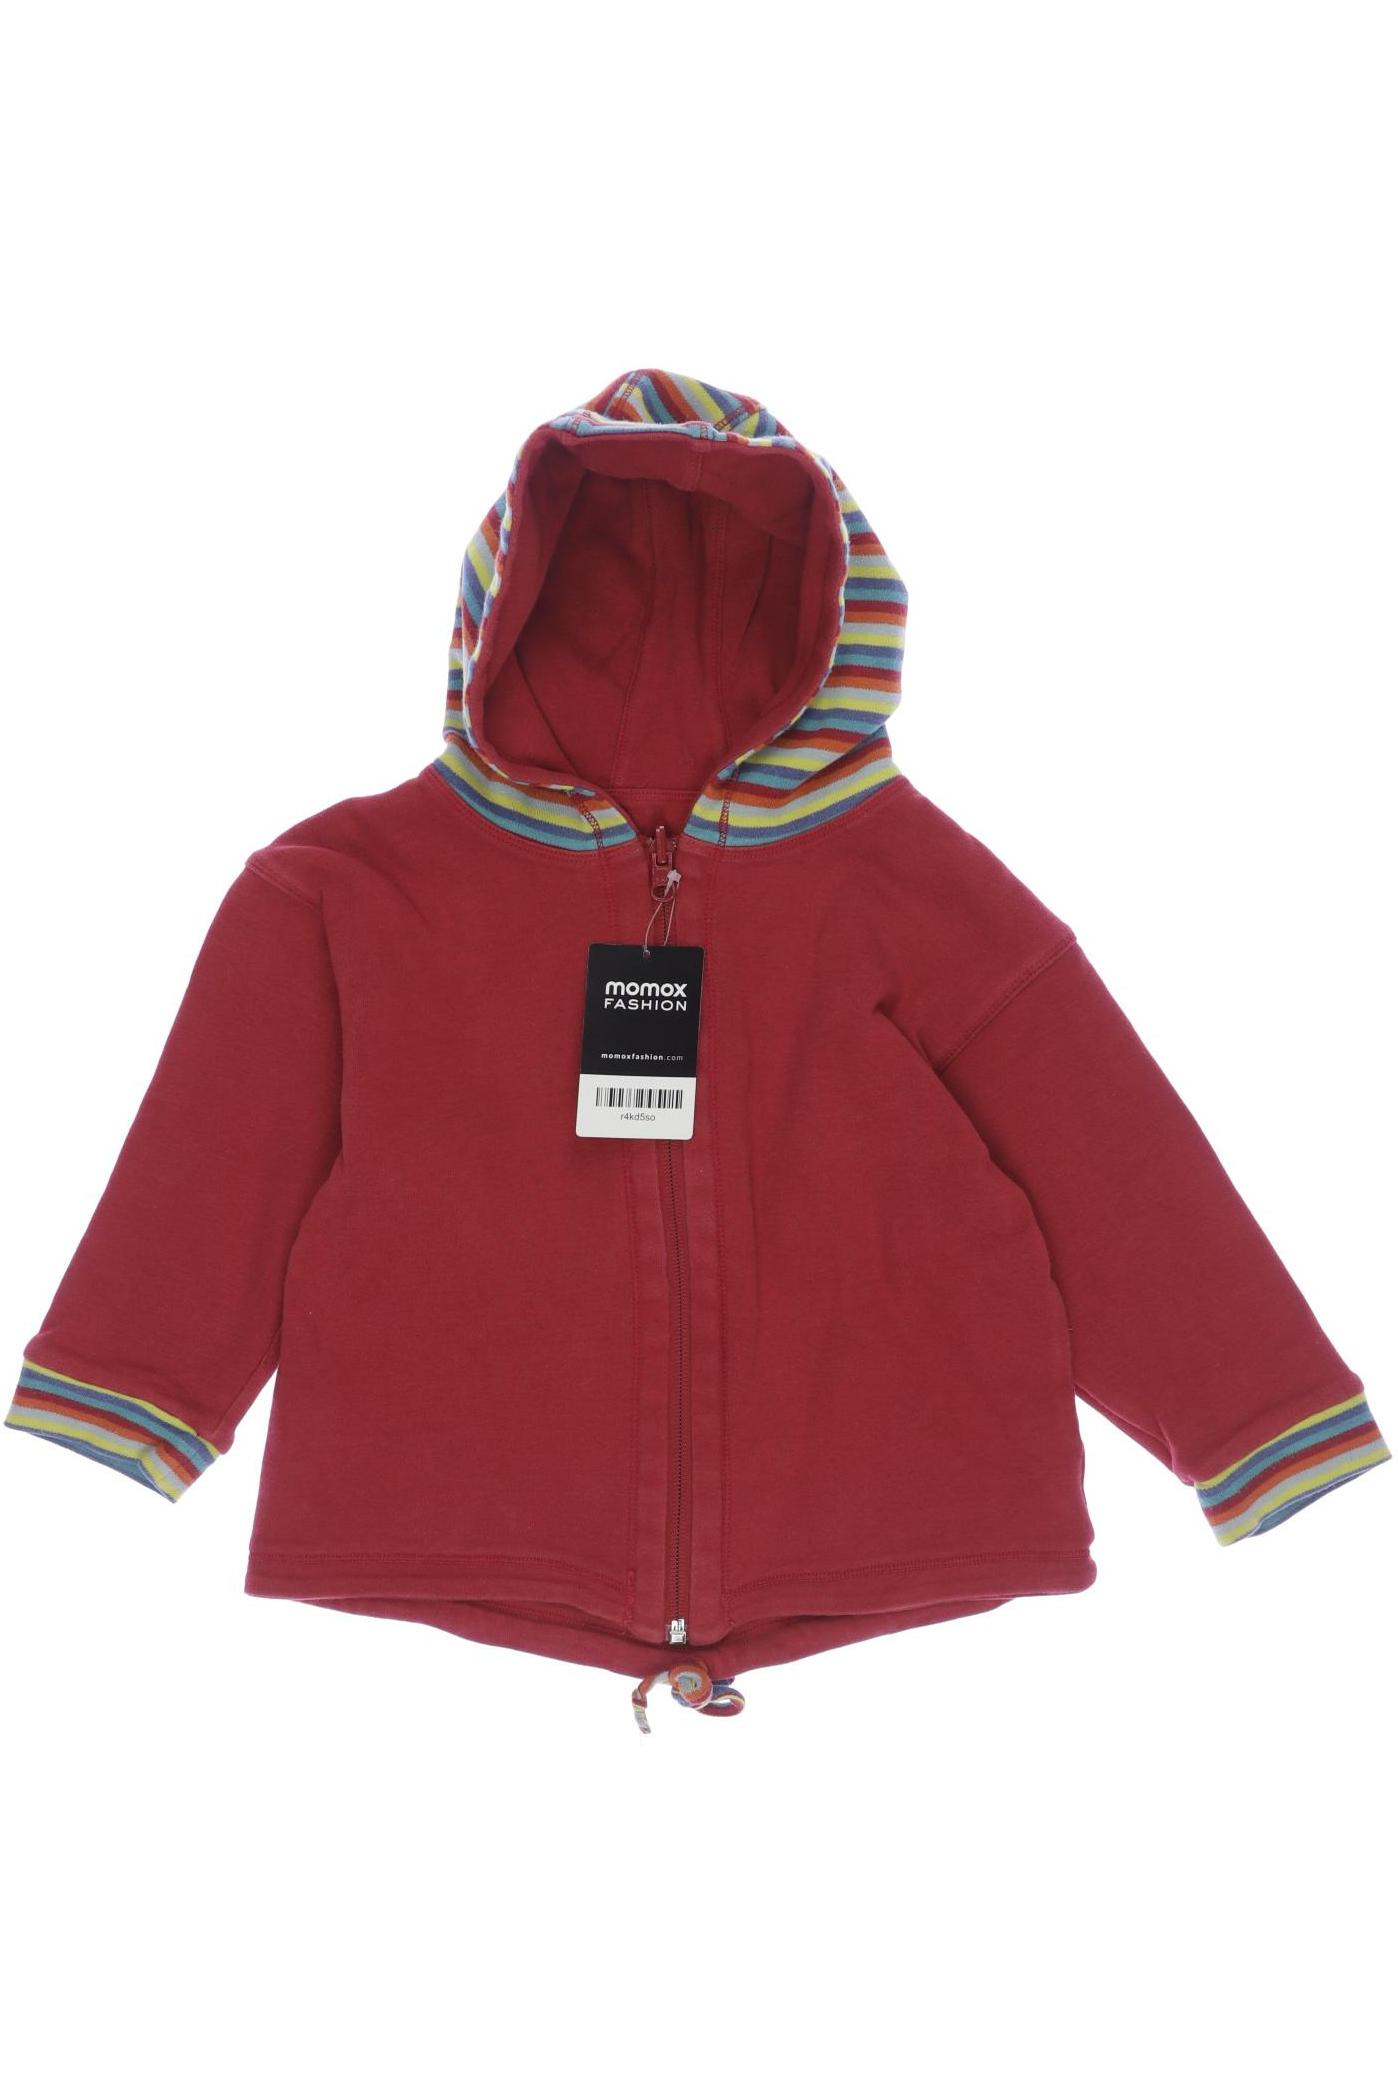 Maas Damen Hoodies & Sweater, rot, Gr. 98 von Maas